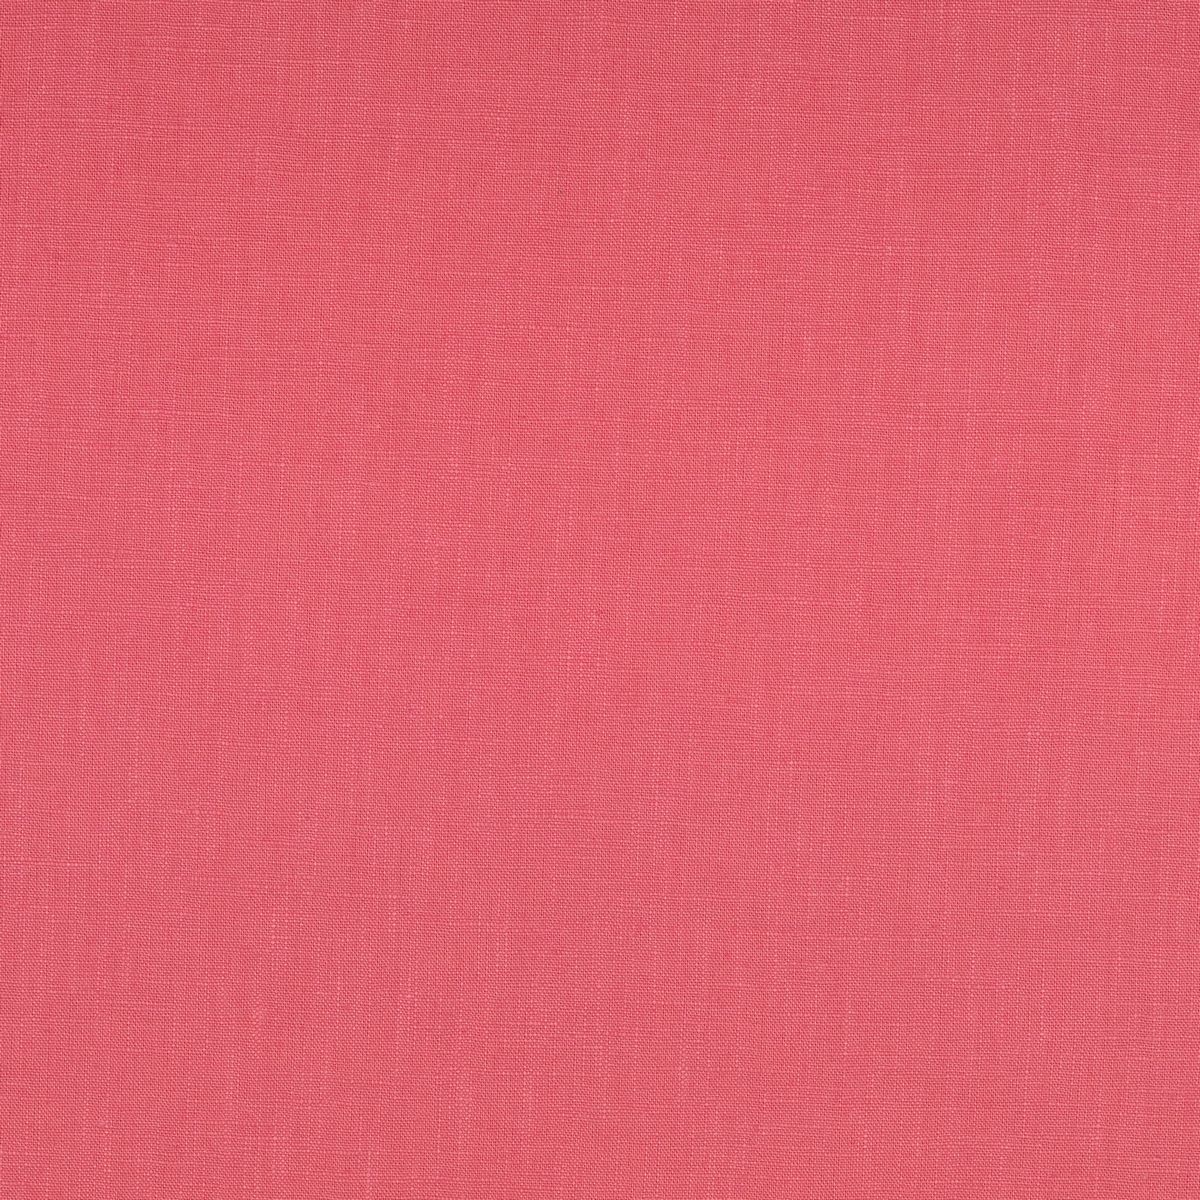 Desert Rose Fabric by Chatham Glyn